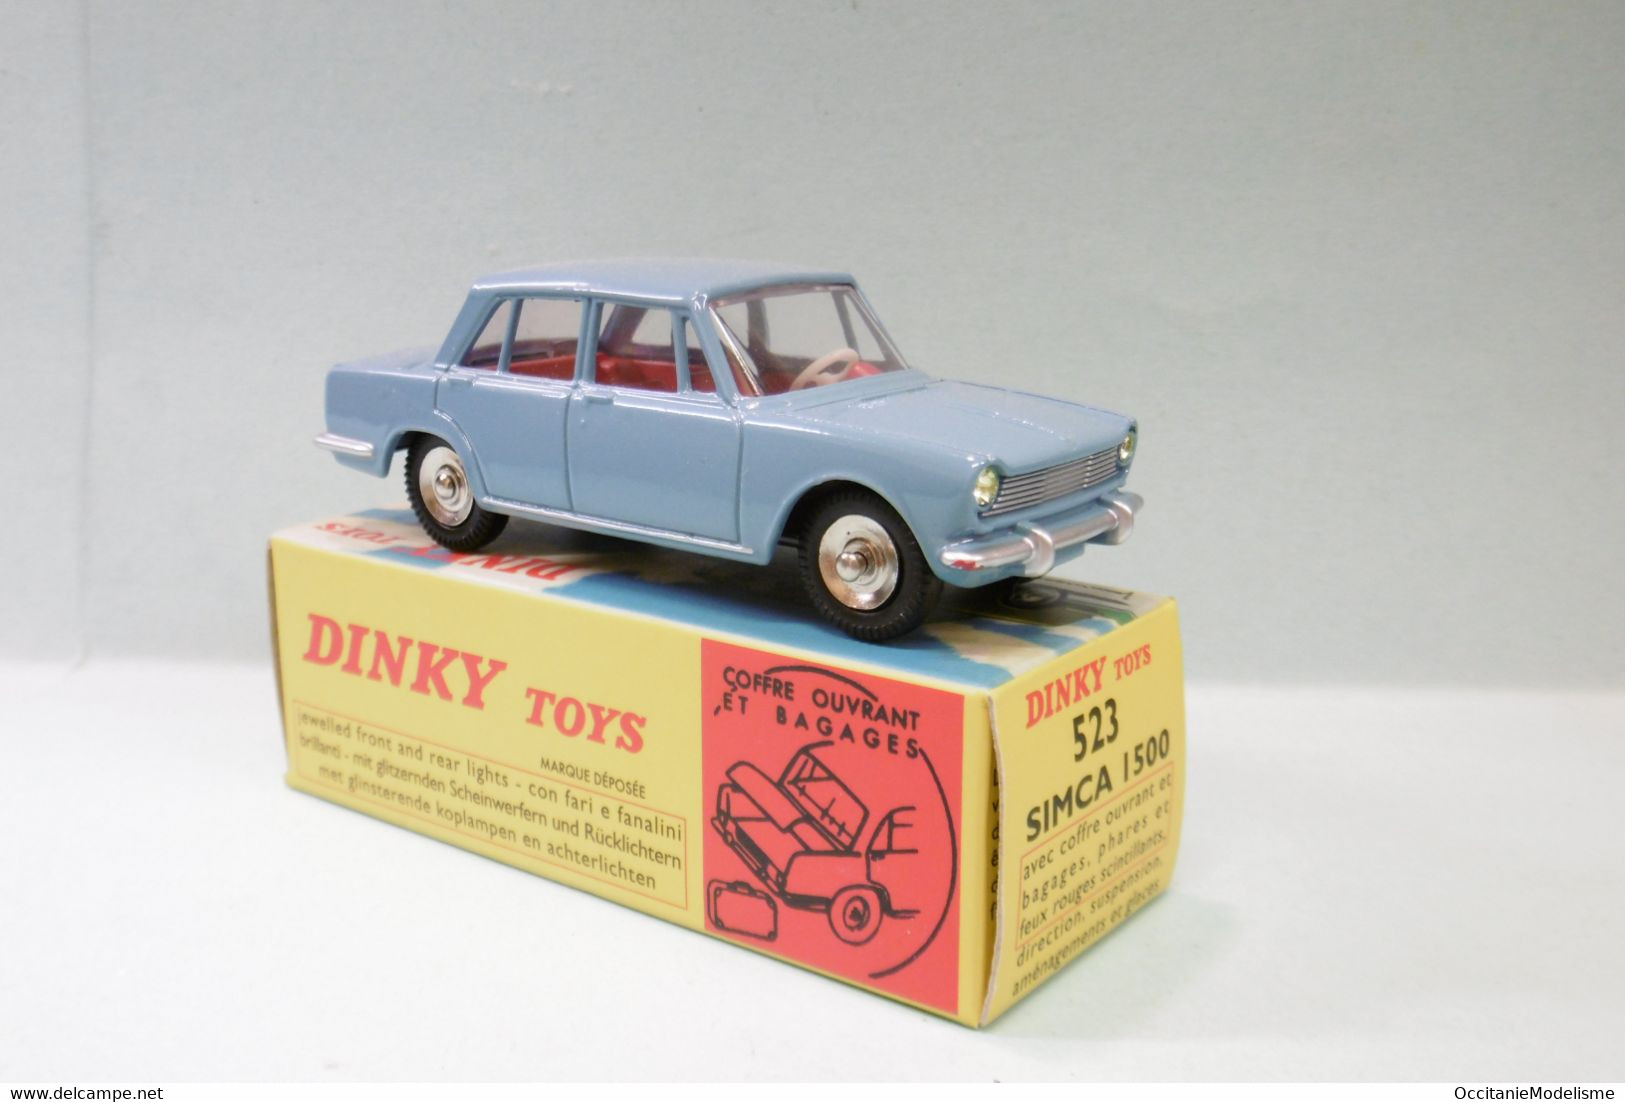 523 Dtf241-dinky toys-simca 1500 sedan-internal glazing plastic 